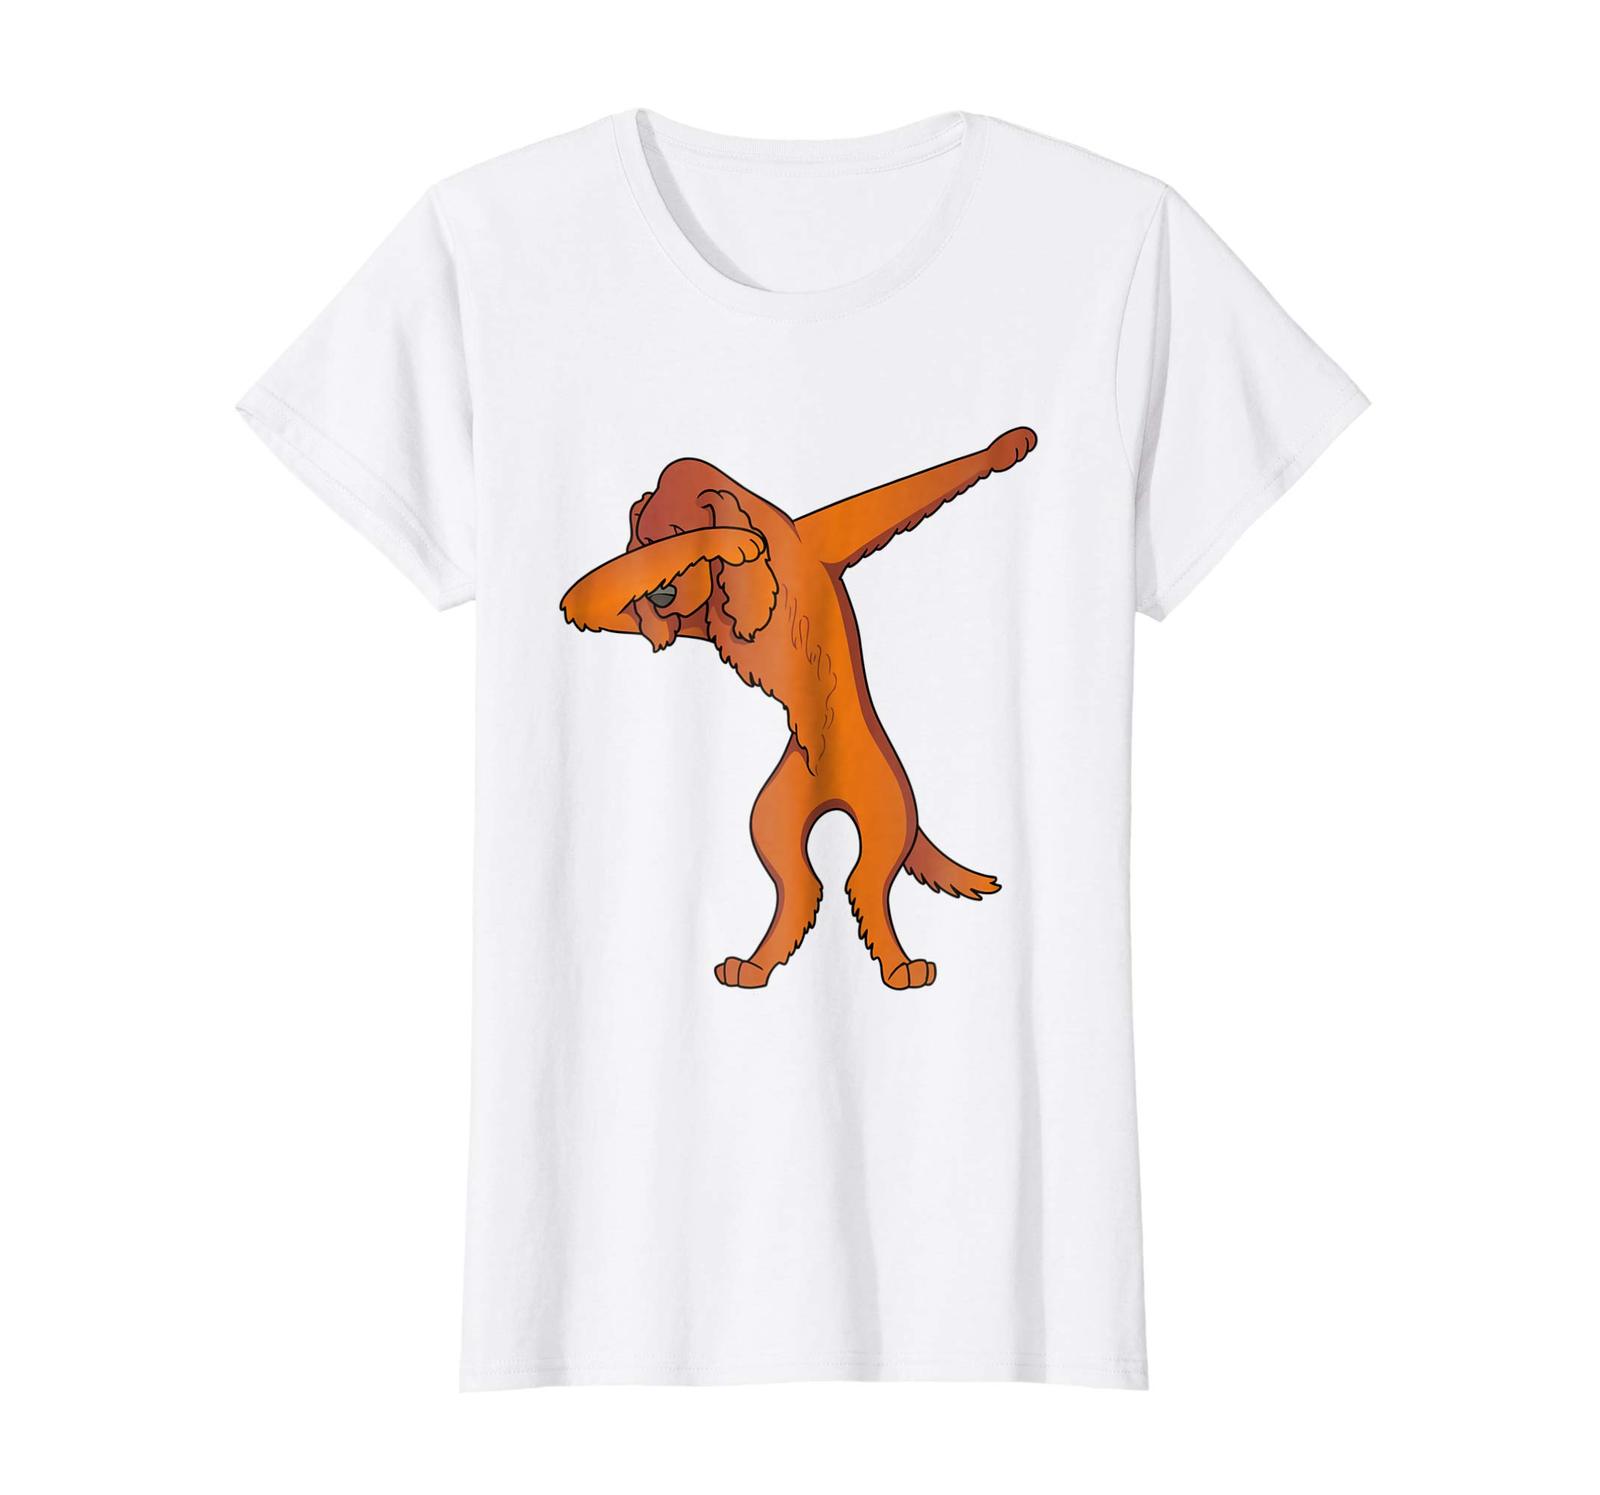 Dog Fashion - Irish Setter Dabbing Shirt Funny Dog Dab Dance T-Shirt Wowen